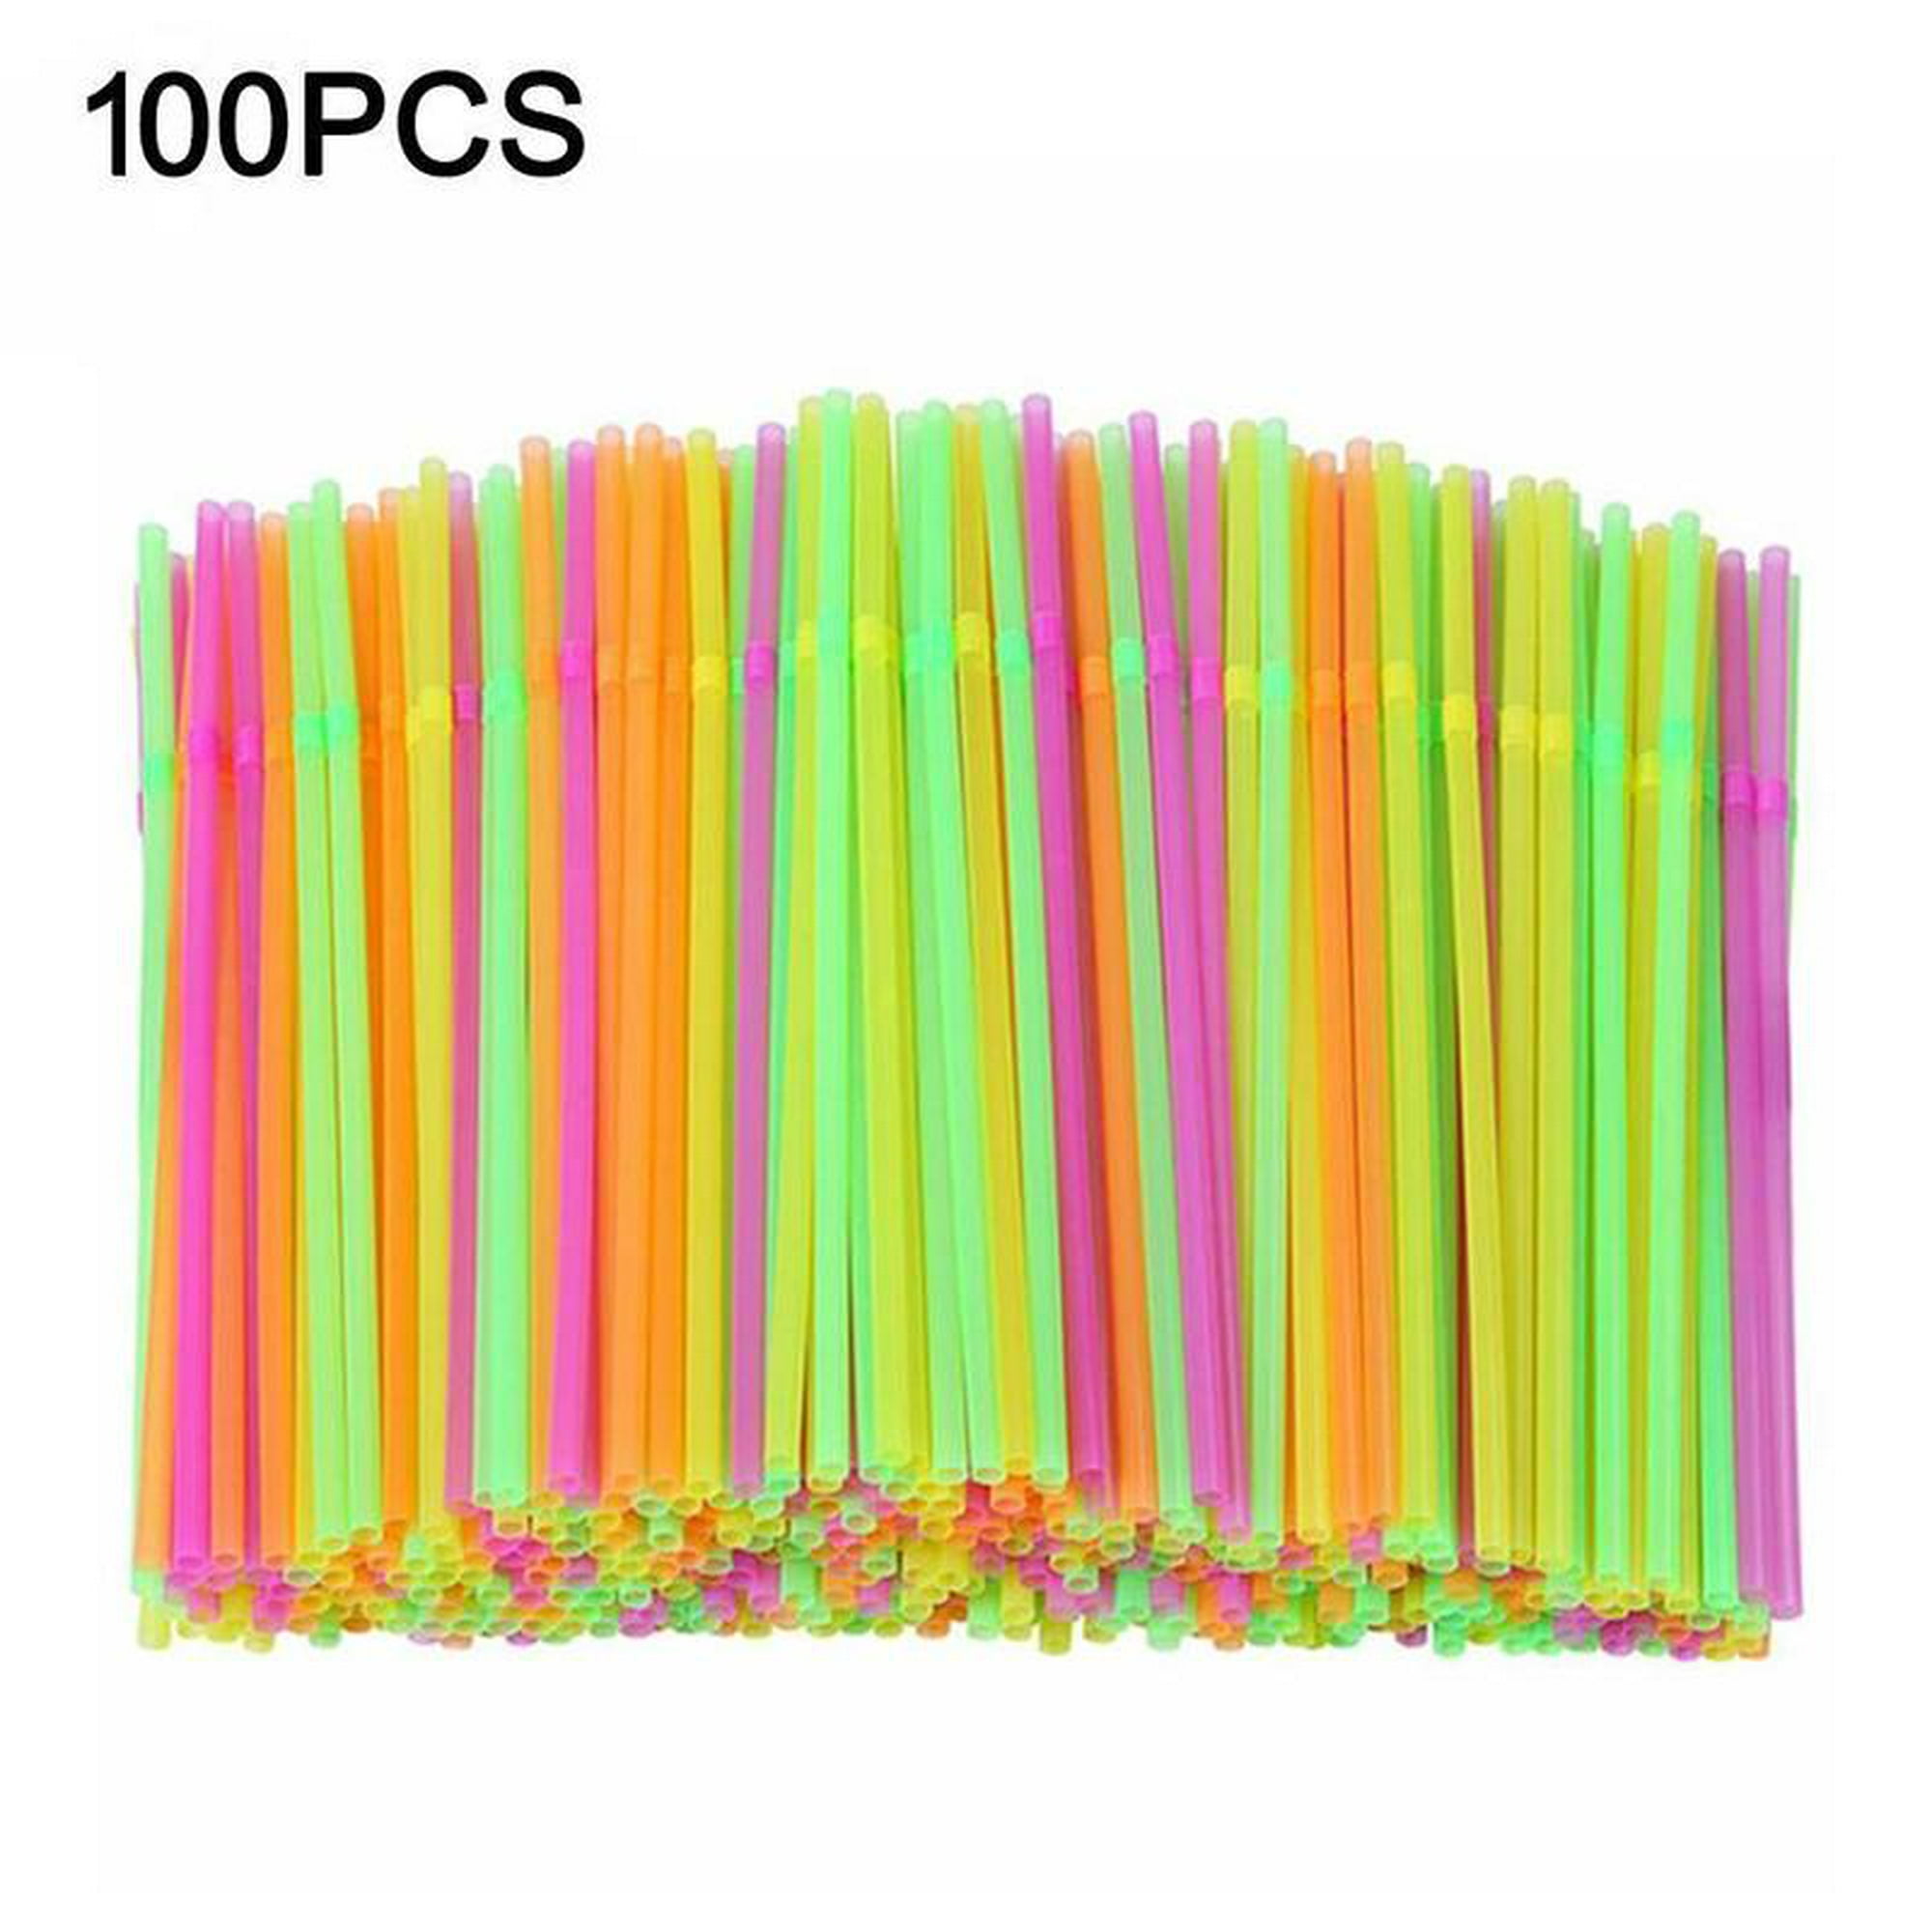 300 Uds pajitas de plástico para beber pajitas desechables de rayas  multicolores largas pajitas de arco iris para fiesta